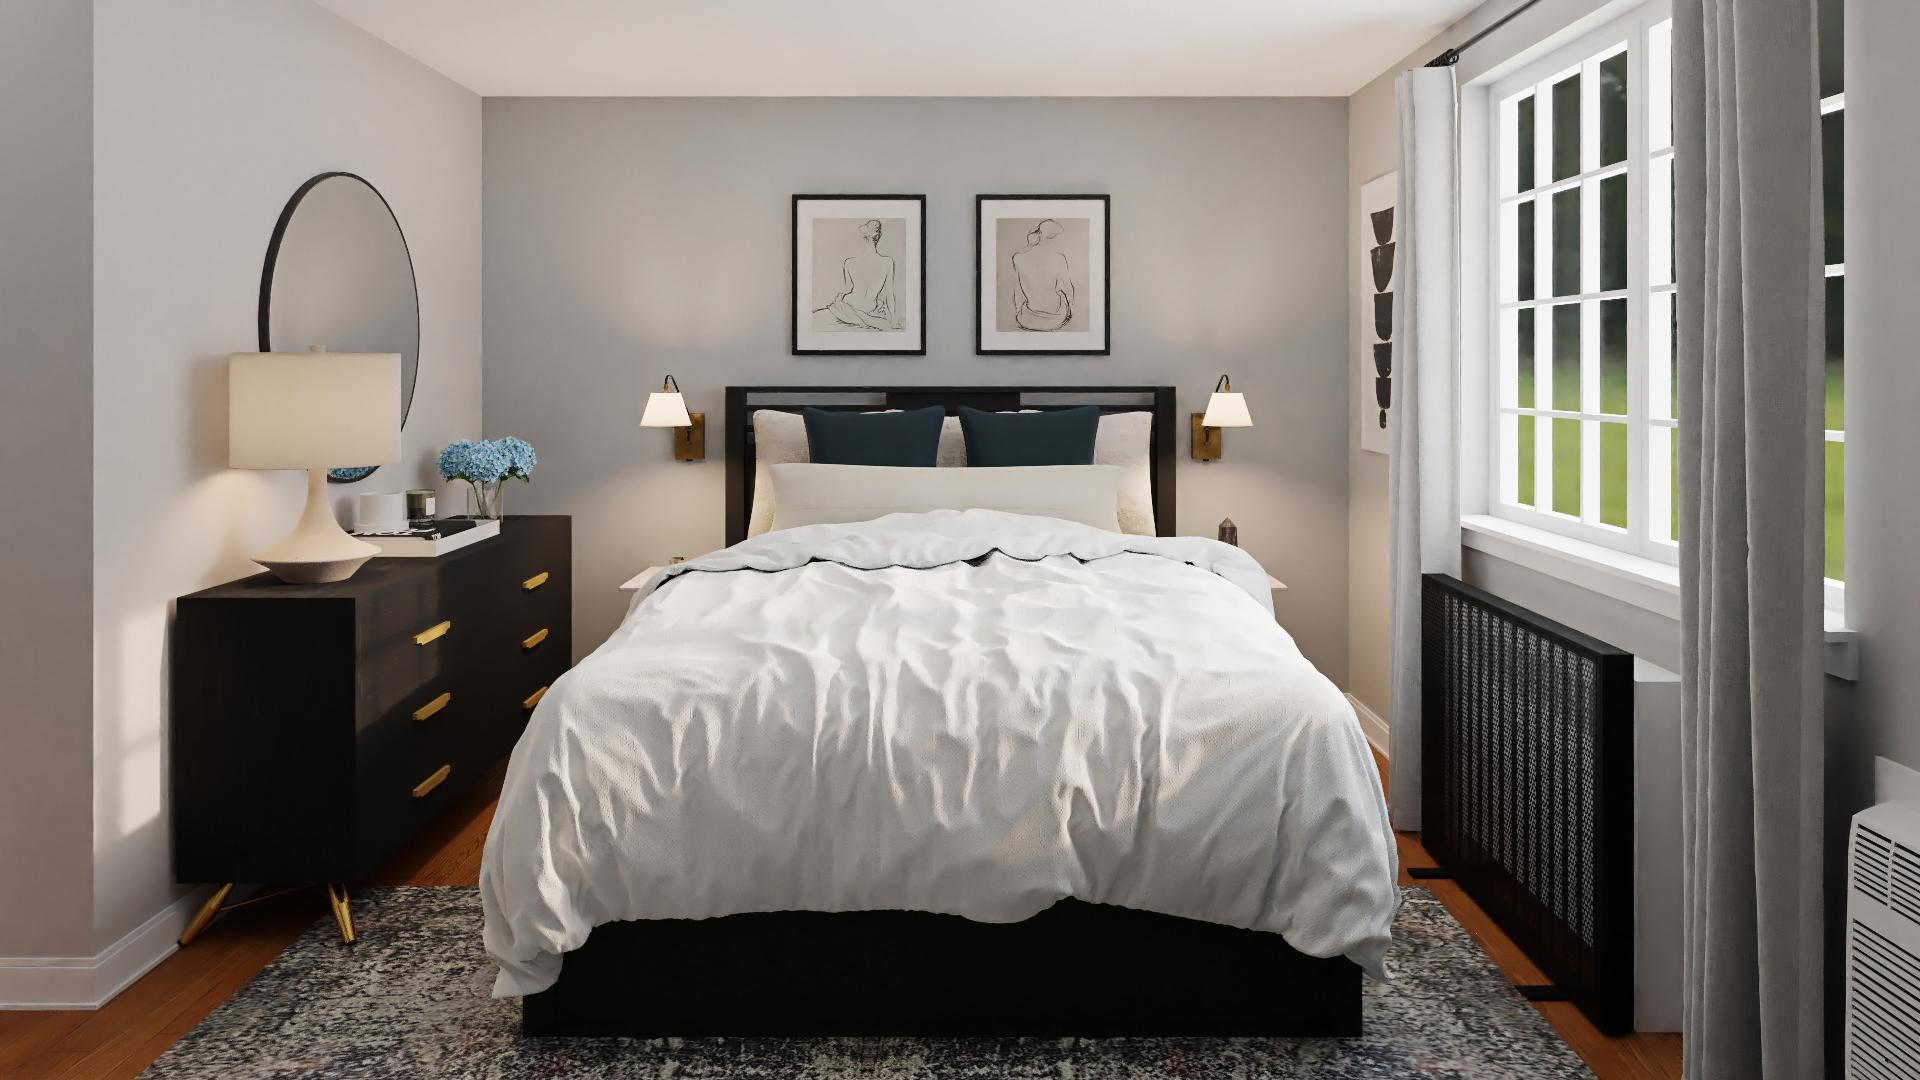 A Modern Bedroom In Black & White Hues